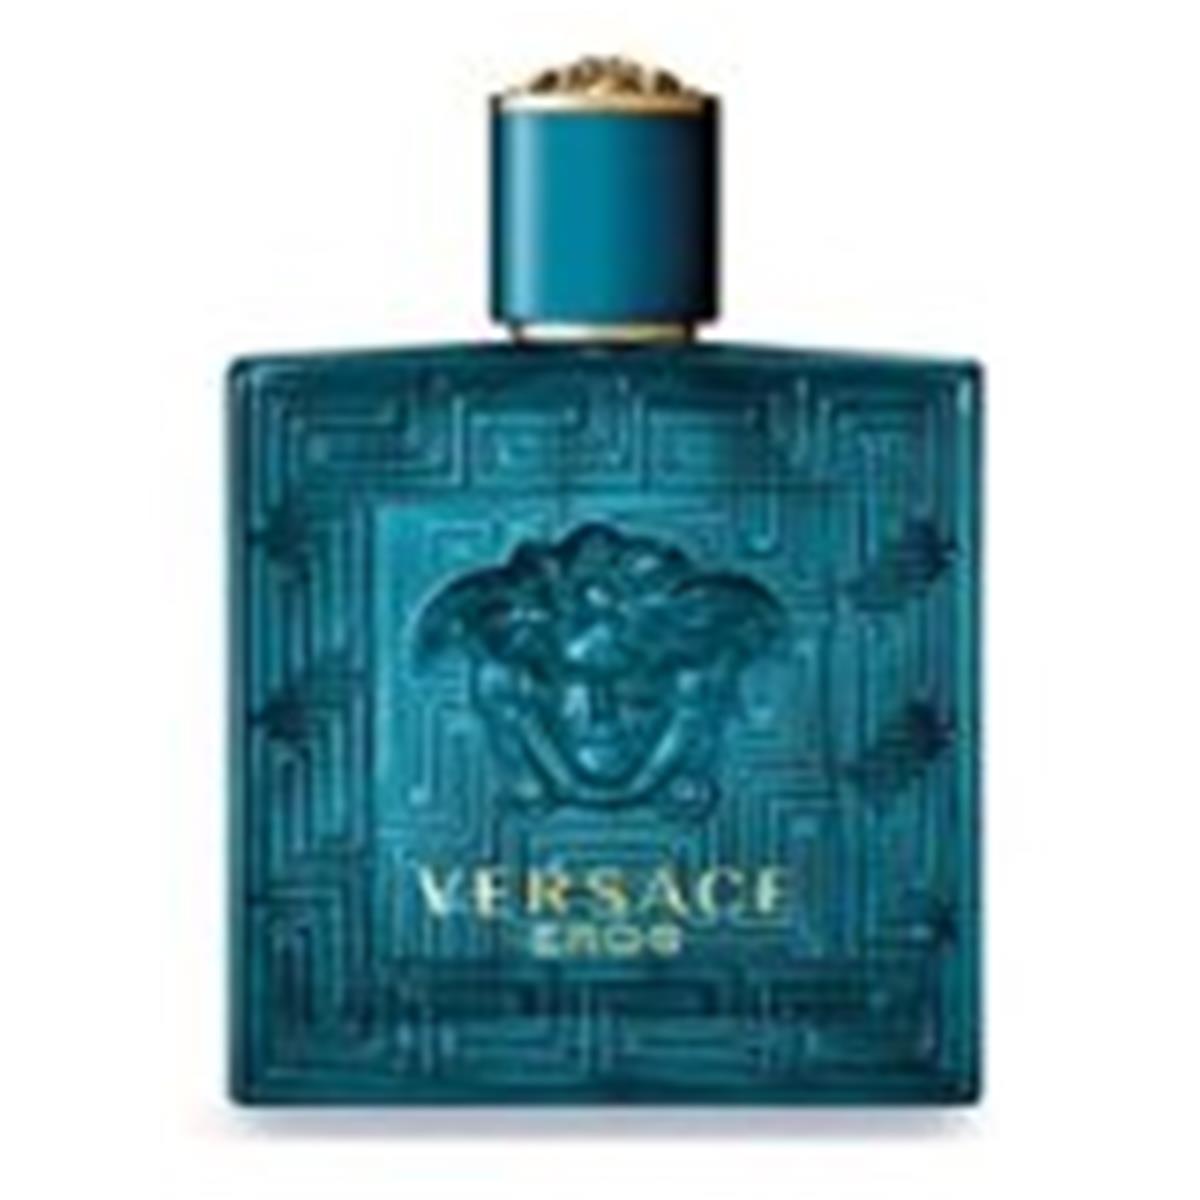 Versace Eros by Versace 1 oz Eau de Toilette Spray for Men